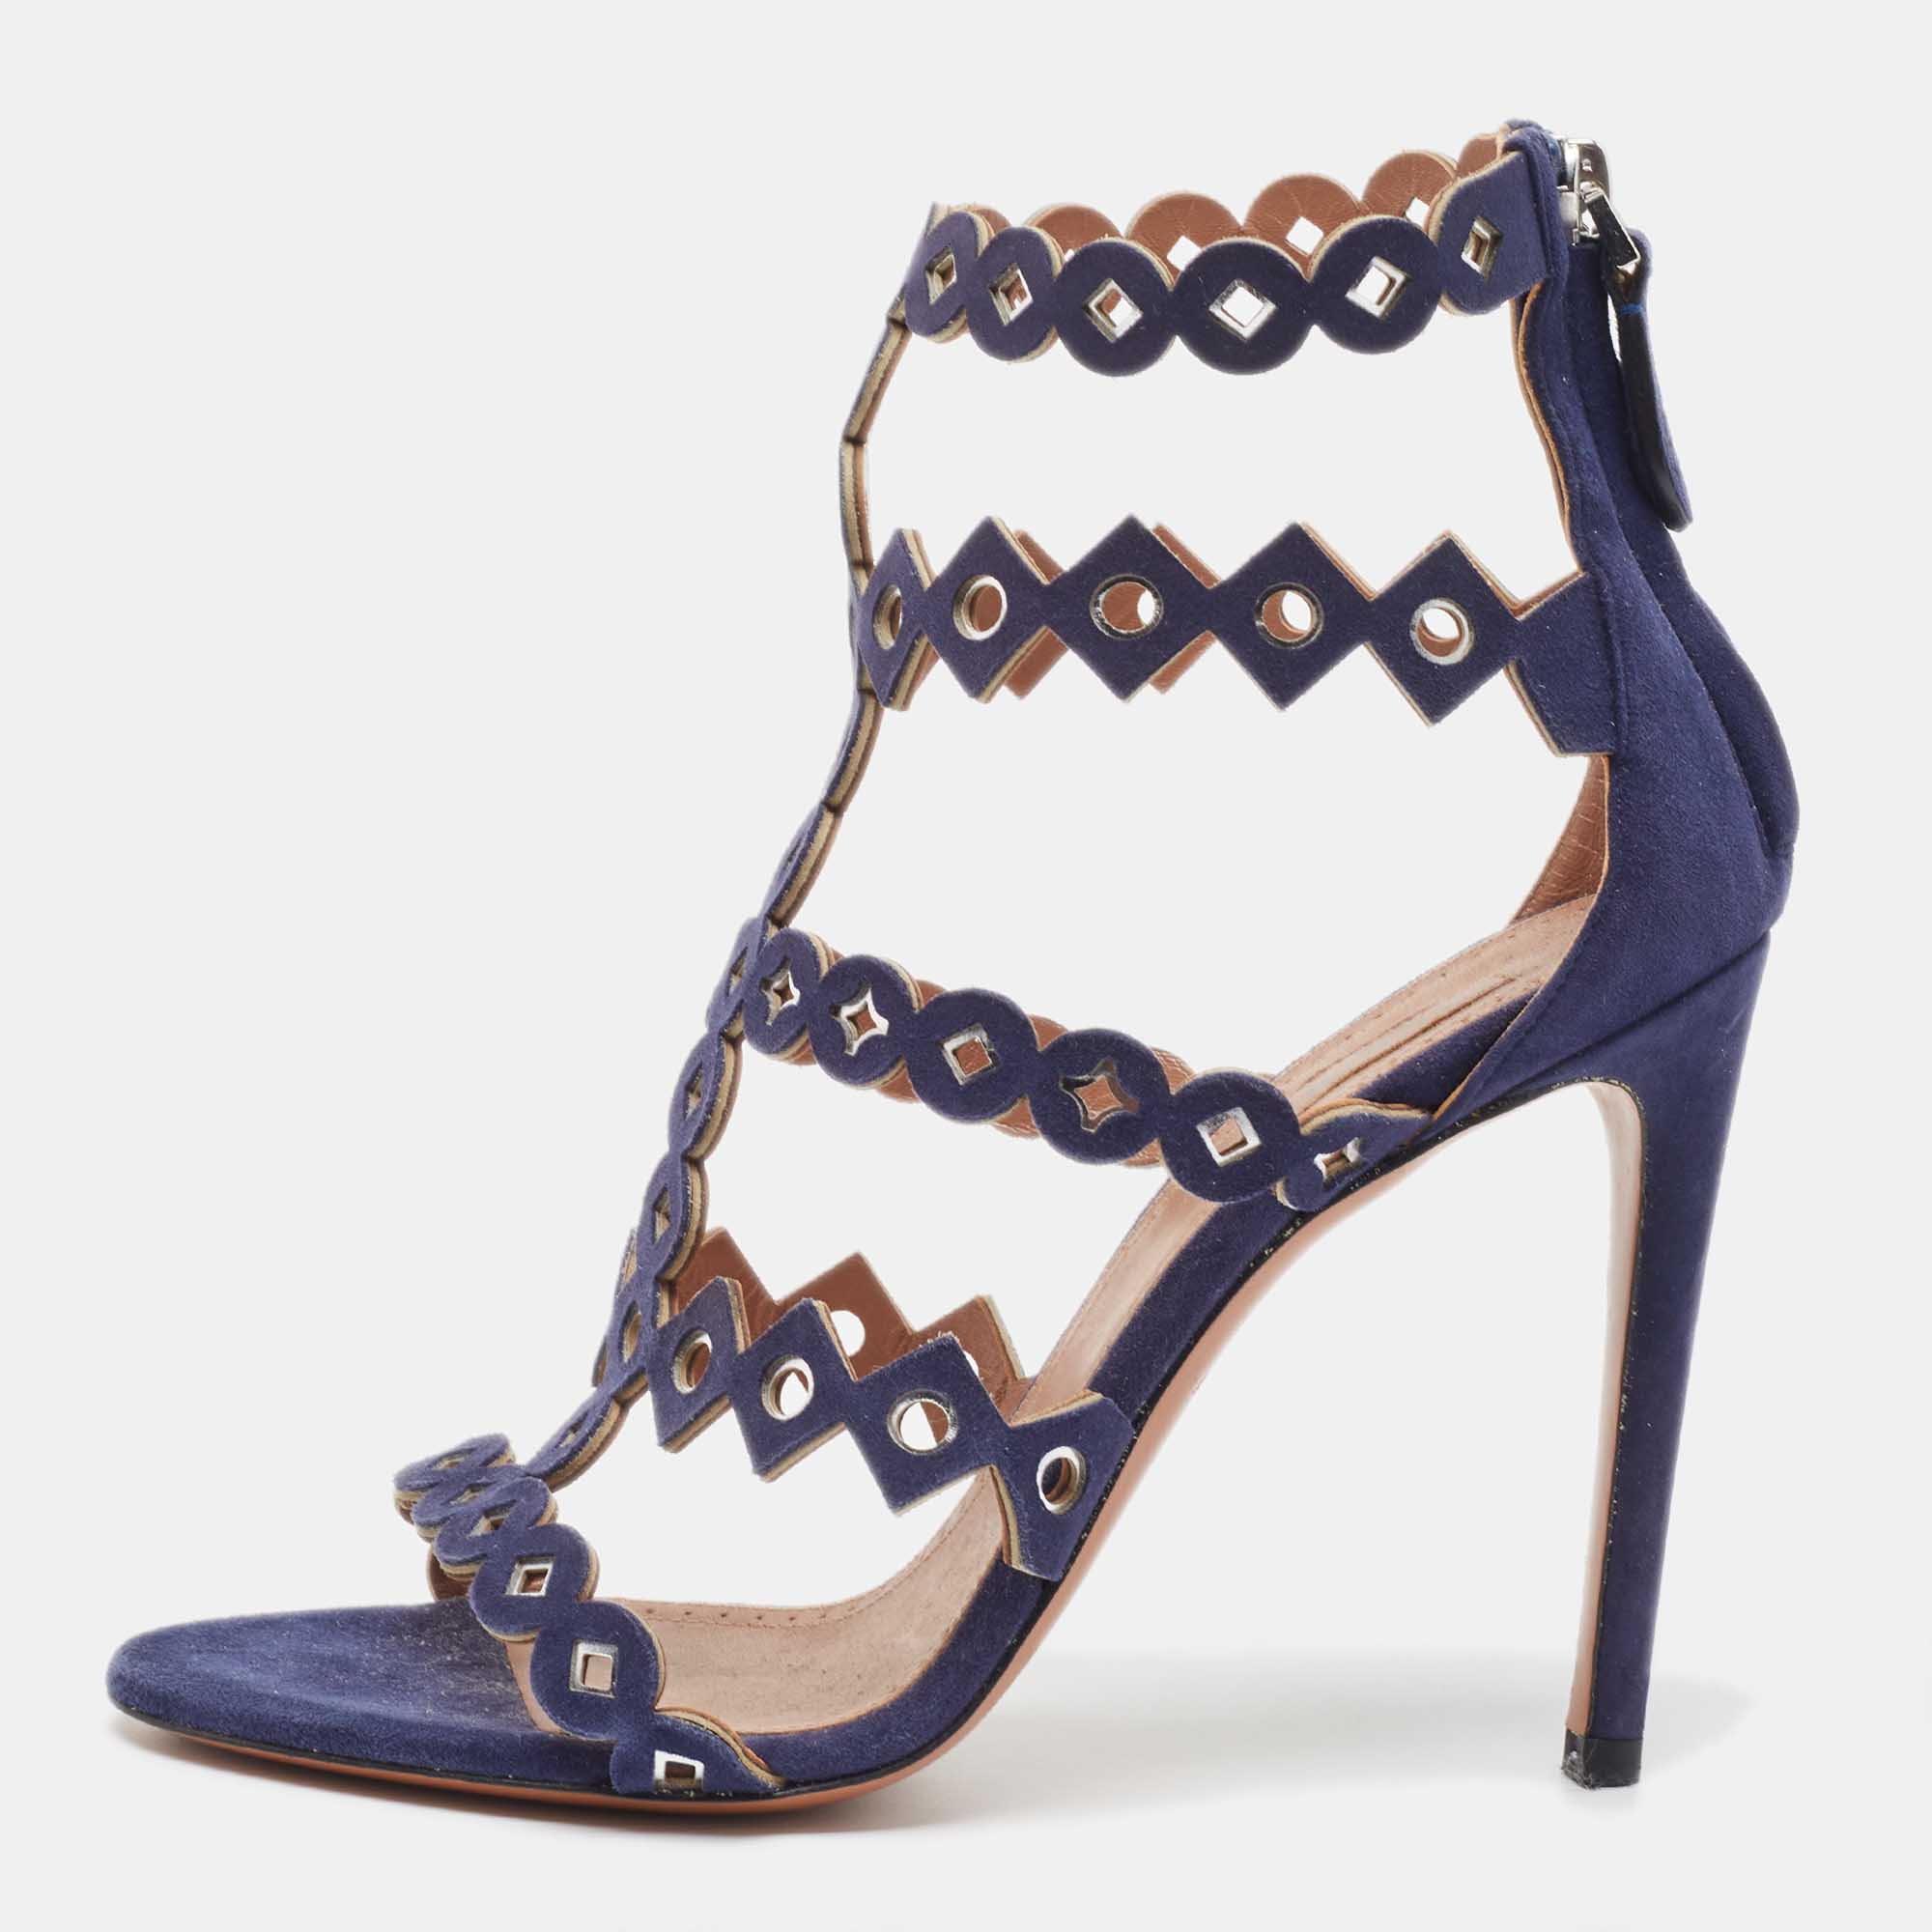 Alaia navy blue laser cut suede t-bar ankle strap sandals size 37